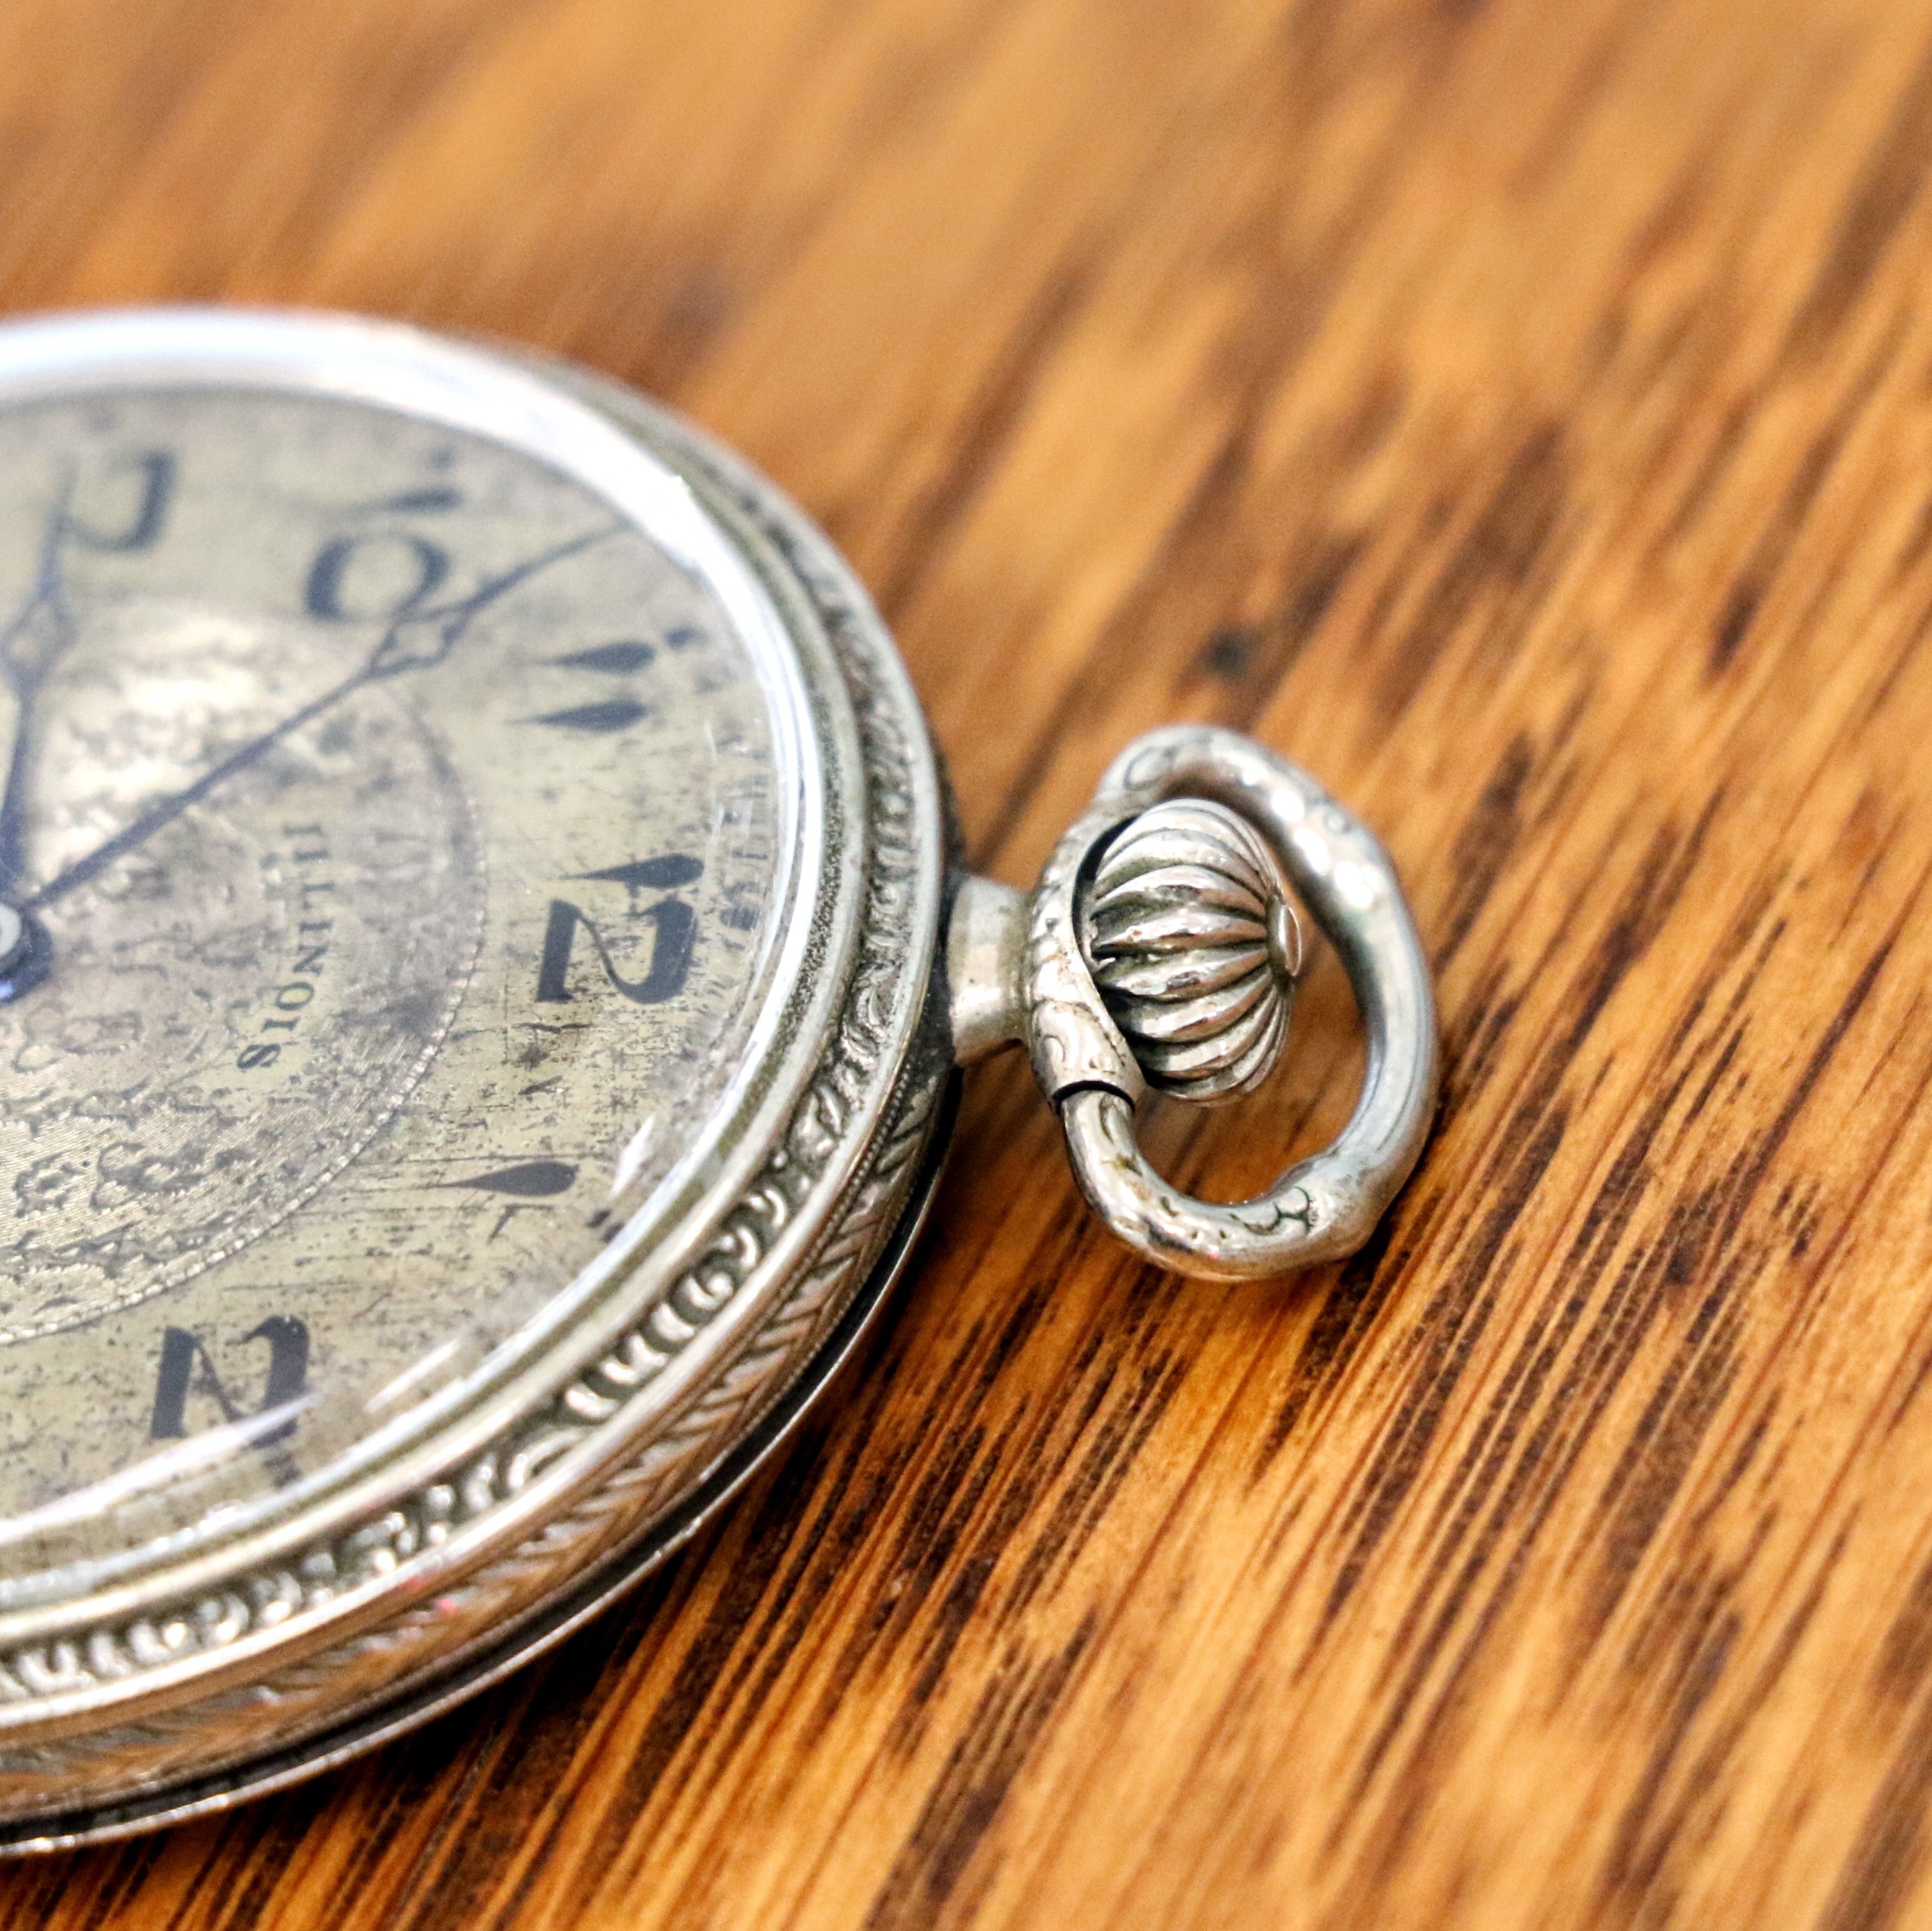 1925 ILLINOIS Time King Pocket Watch Size 12s 17 Jewels Grade 405 U.S.A. Made Art Deco Watch